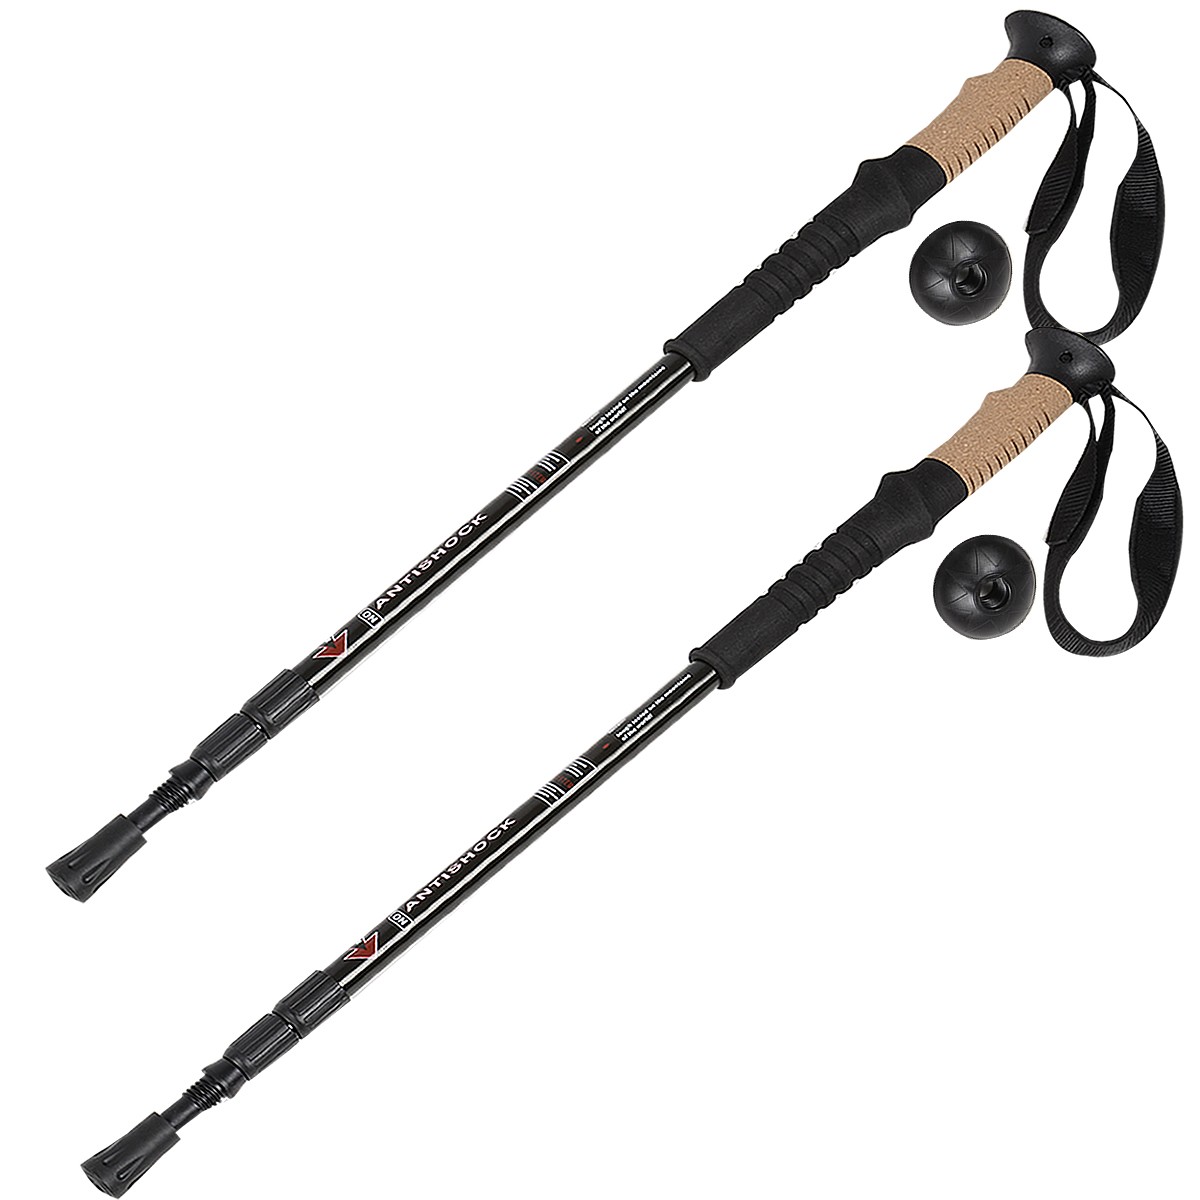 Pair 2 Alpenstock Adjustable Anti - Shock Hiking Sticks